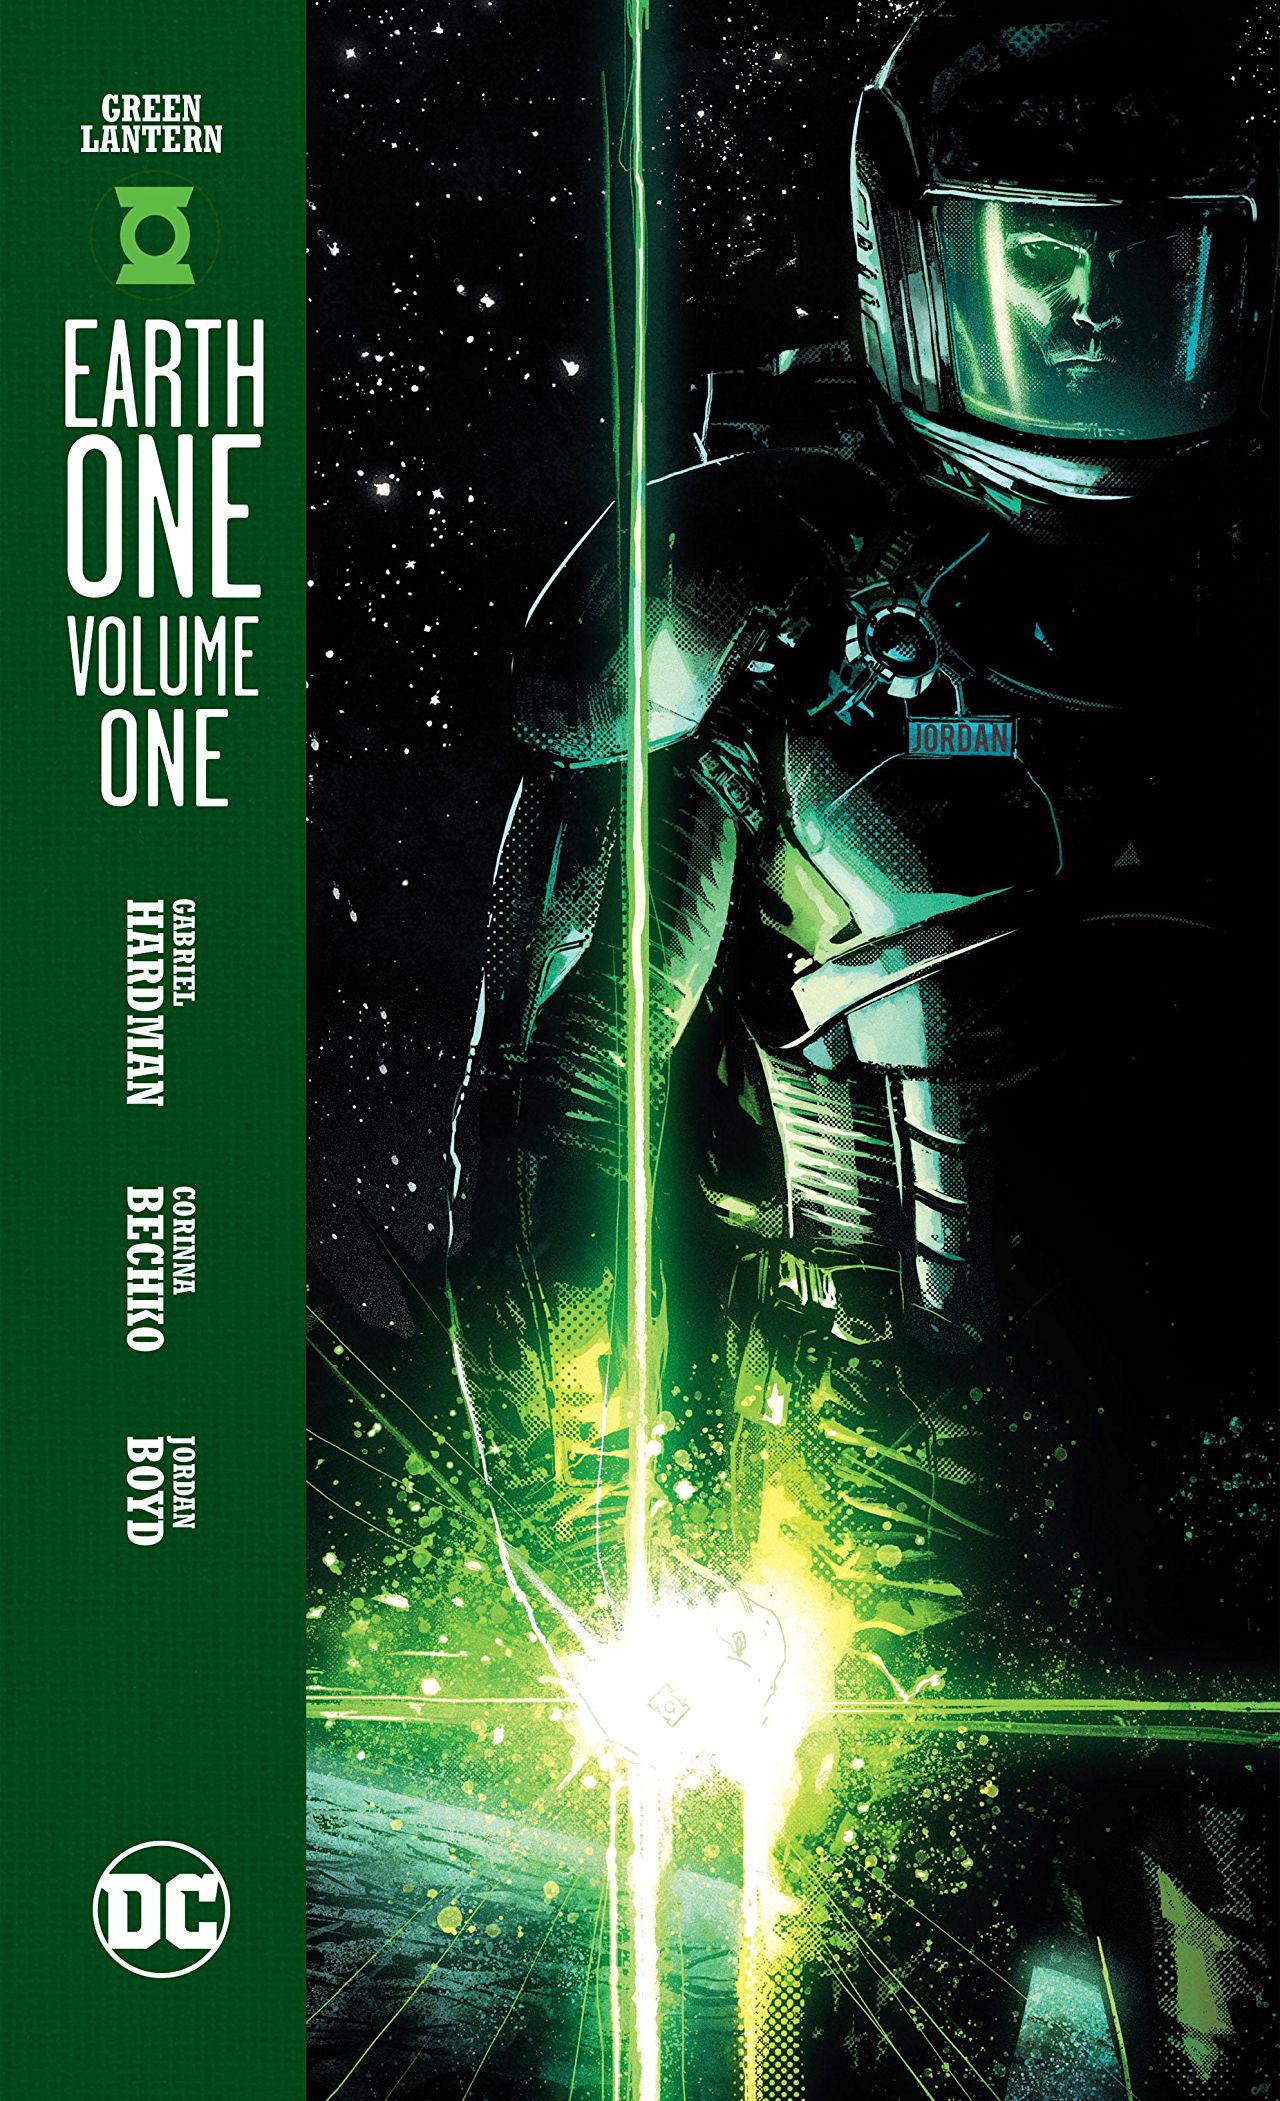 'Green Lantern: Earth One' Vol. 1 is a fresh interpretation perfect for new readers